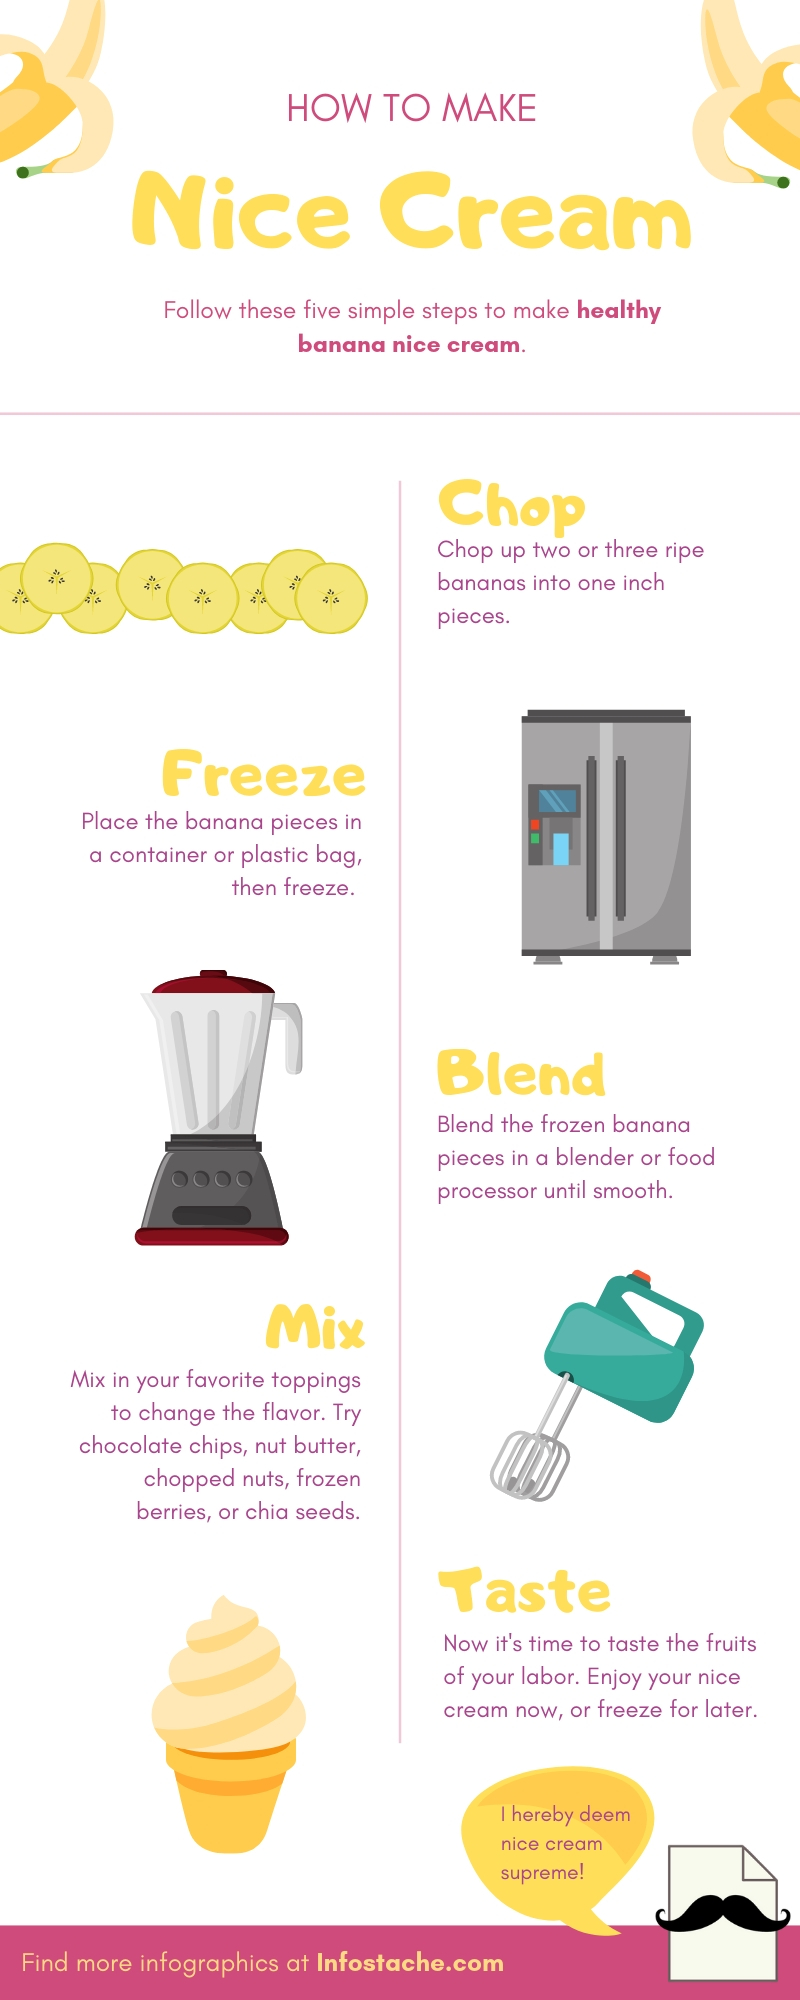 How to Make Nice Cream - Infographic